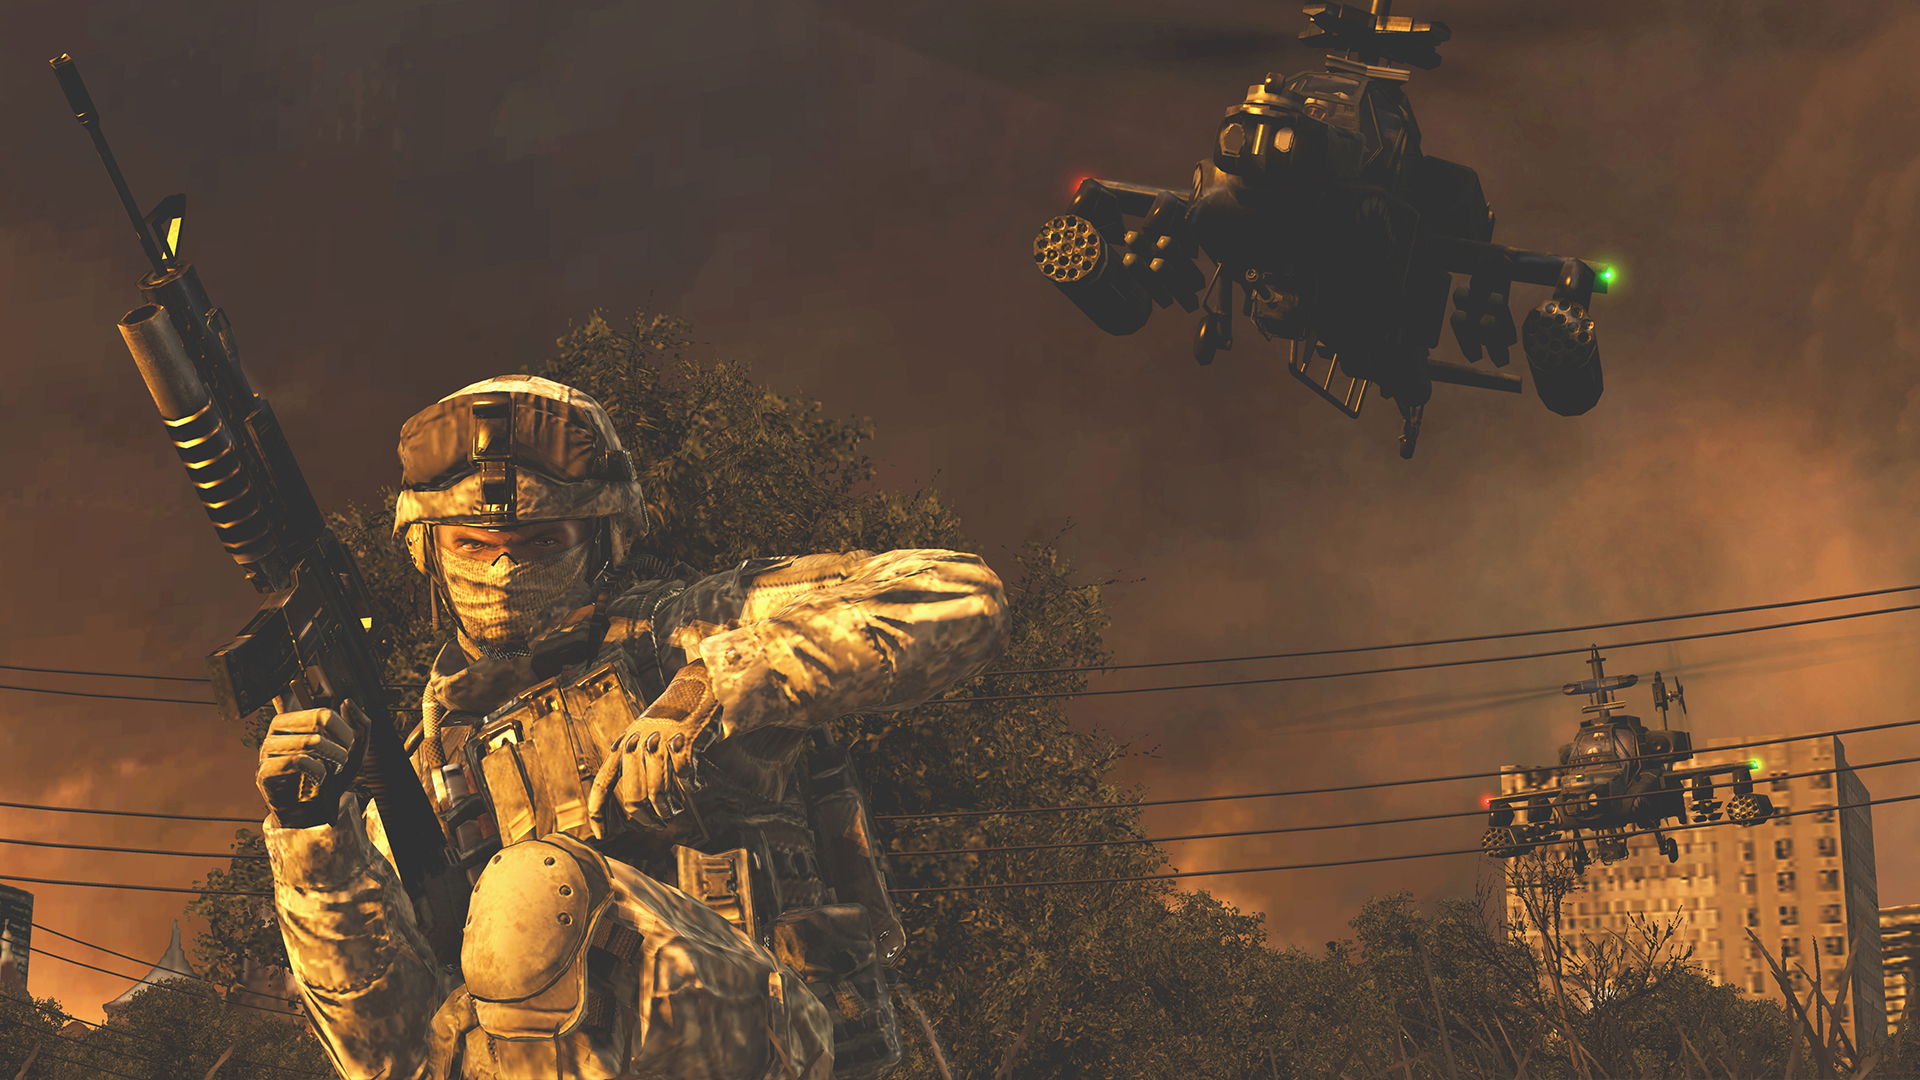 Modern Warfare 2 Remastered will release this week